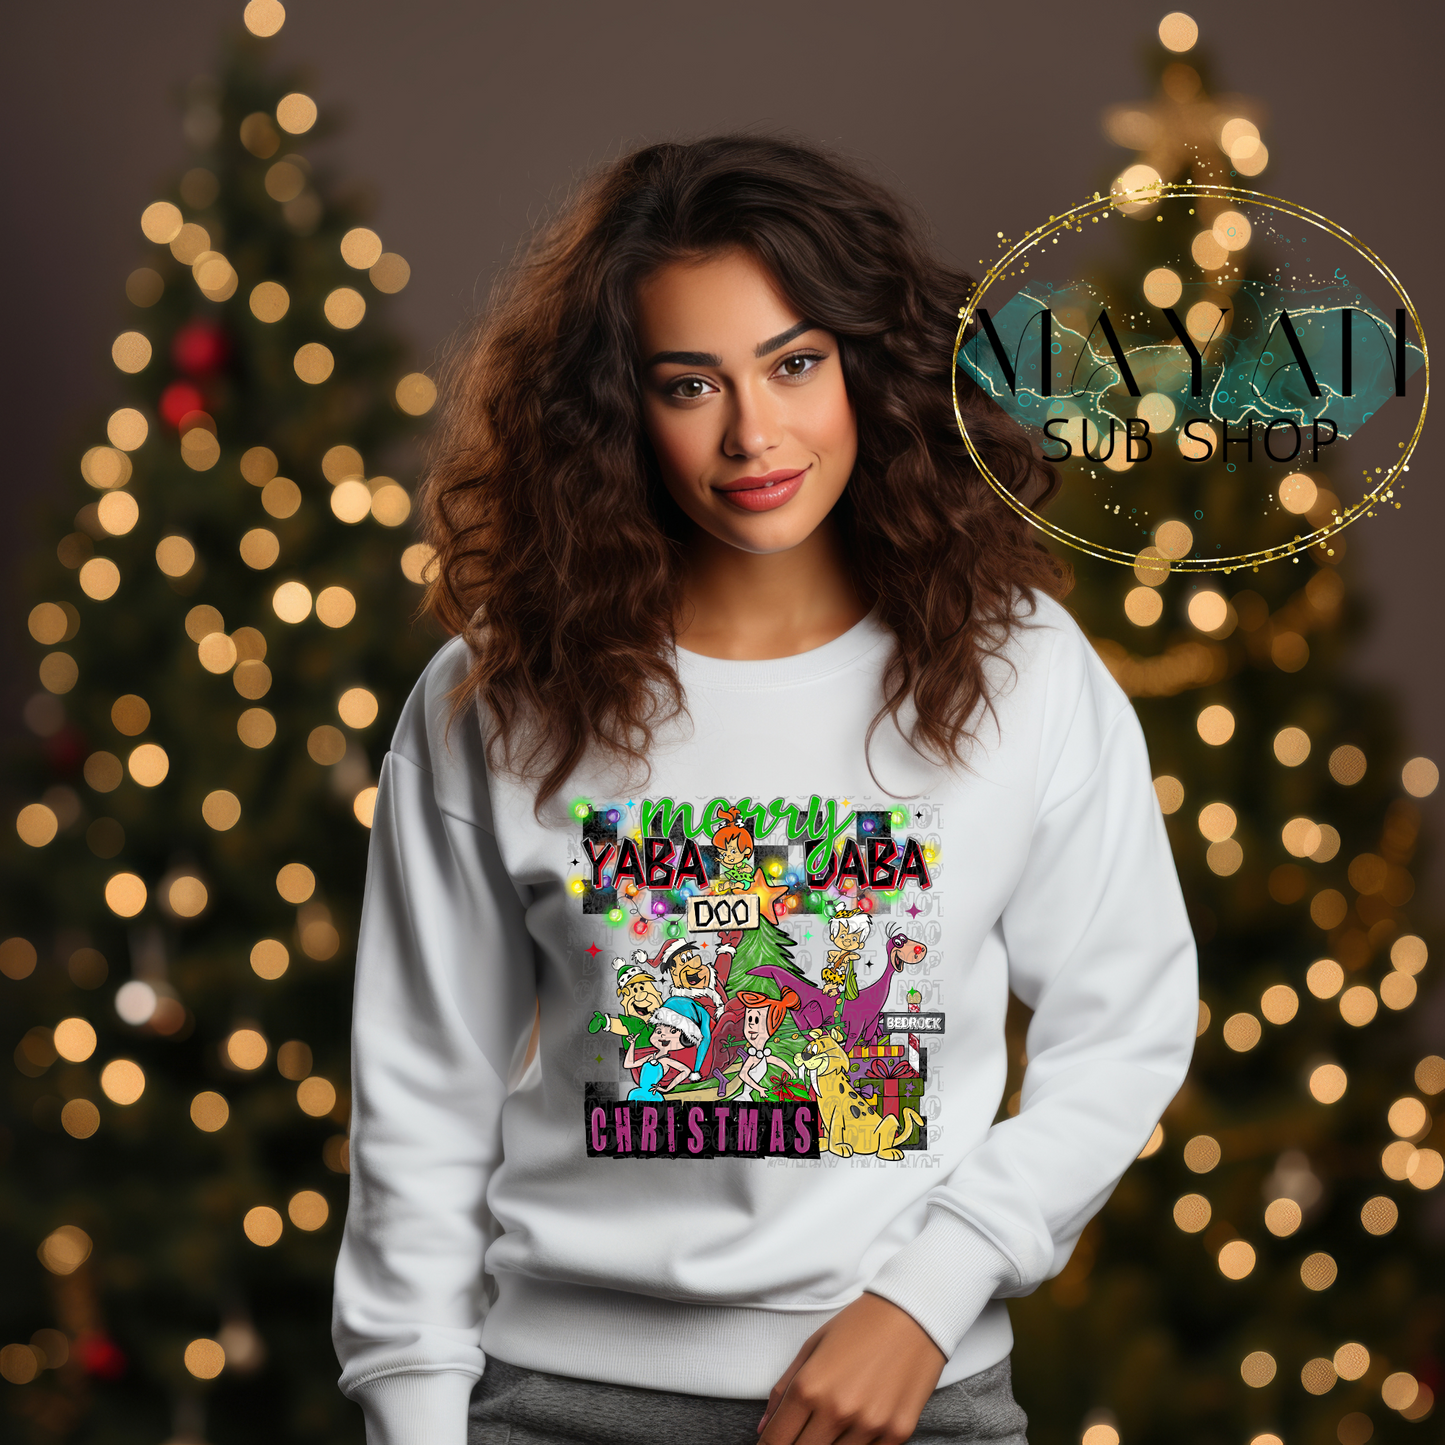 Yaba-Daba-Doo Christmas Sweatshirt - Mayan Sub Shop